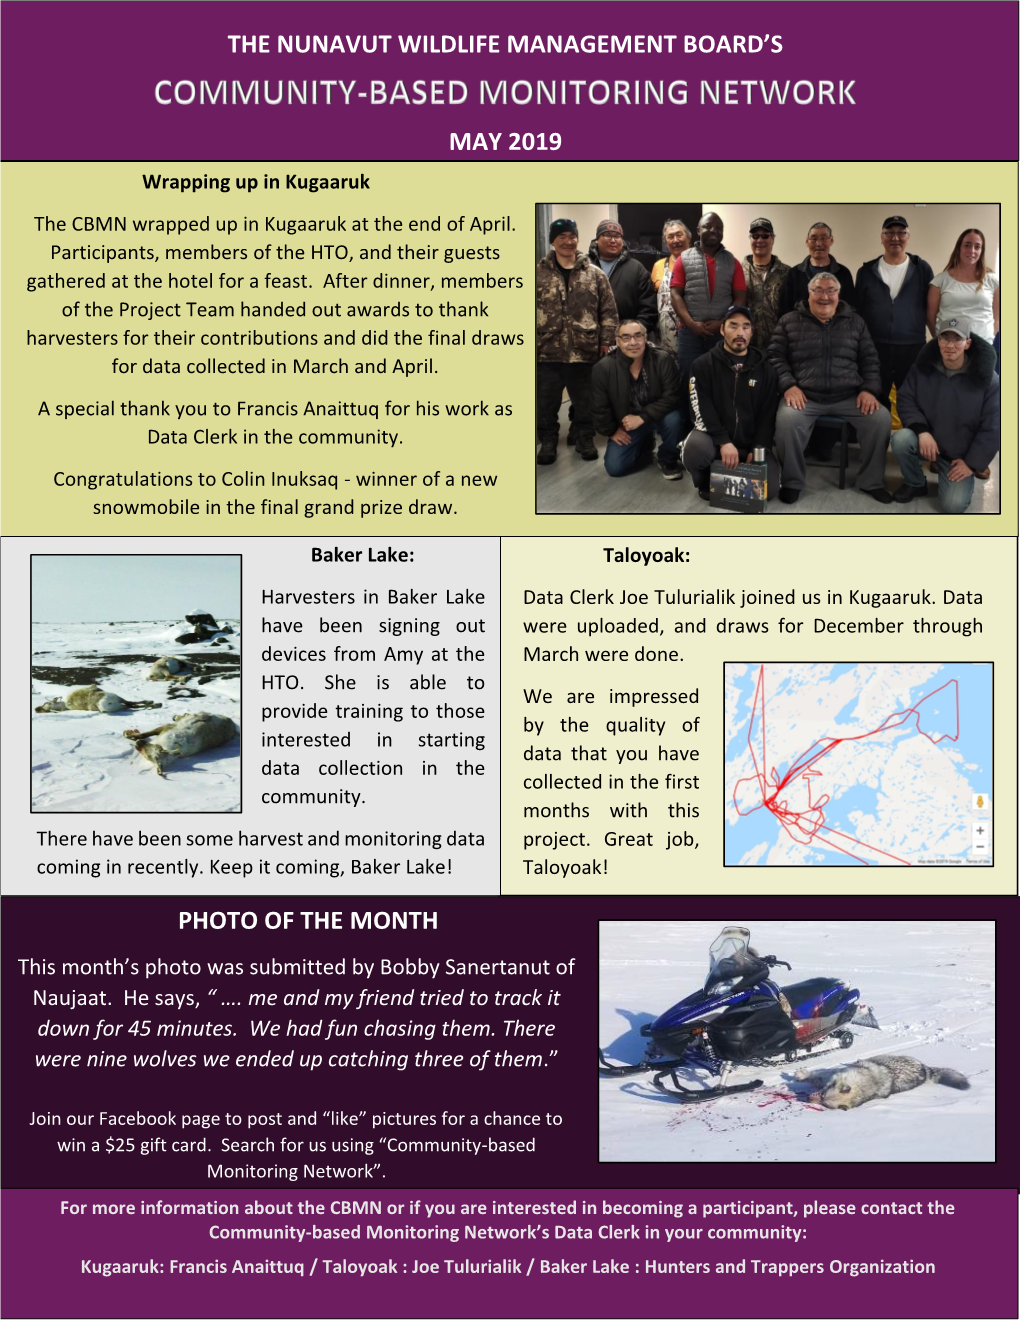 Photo of the Month the Nunavut Wildlife